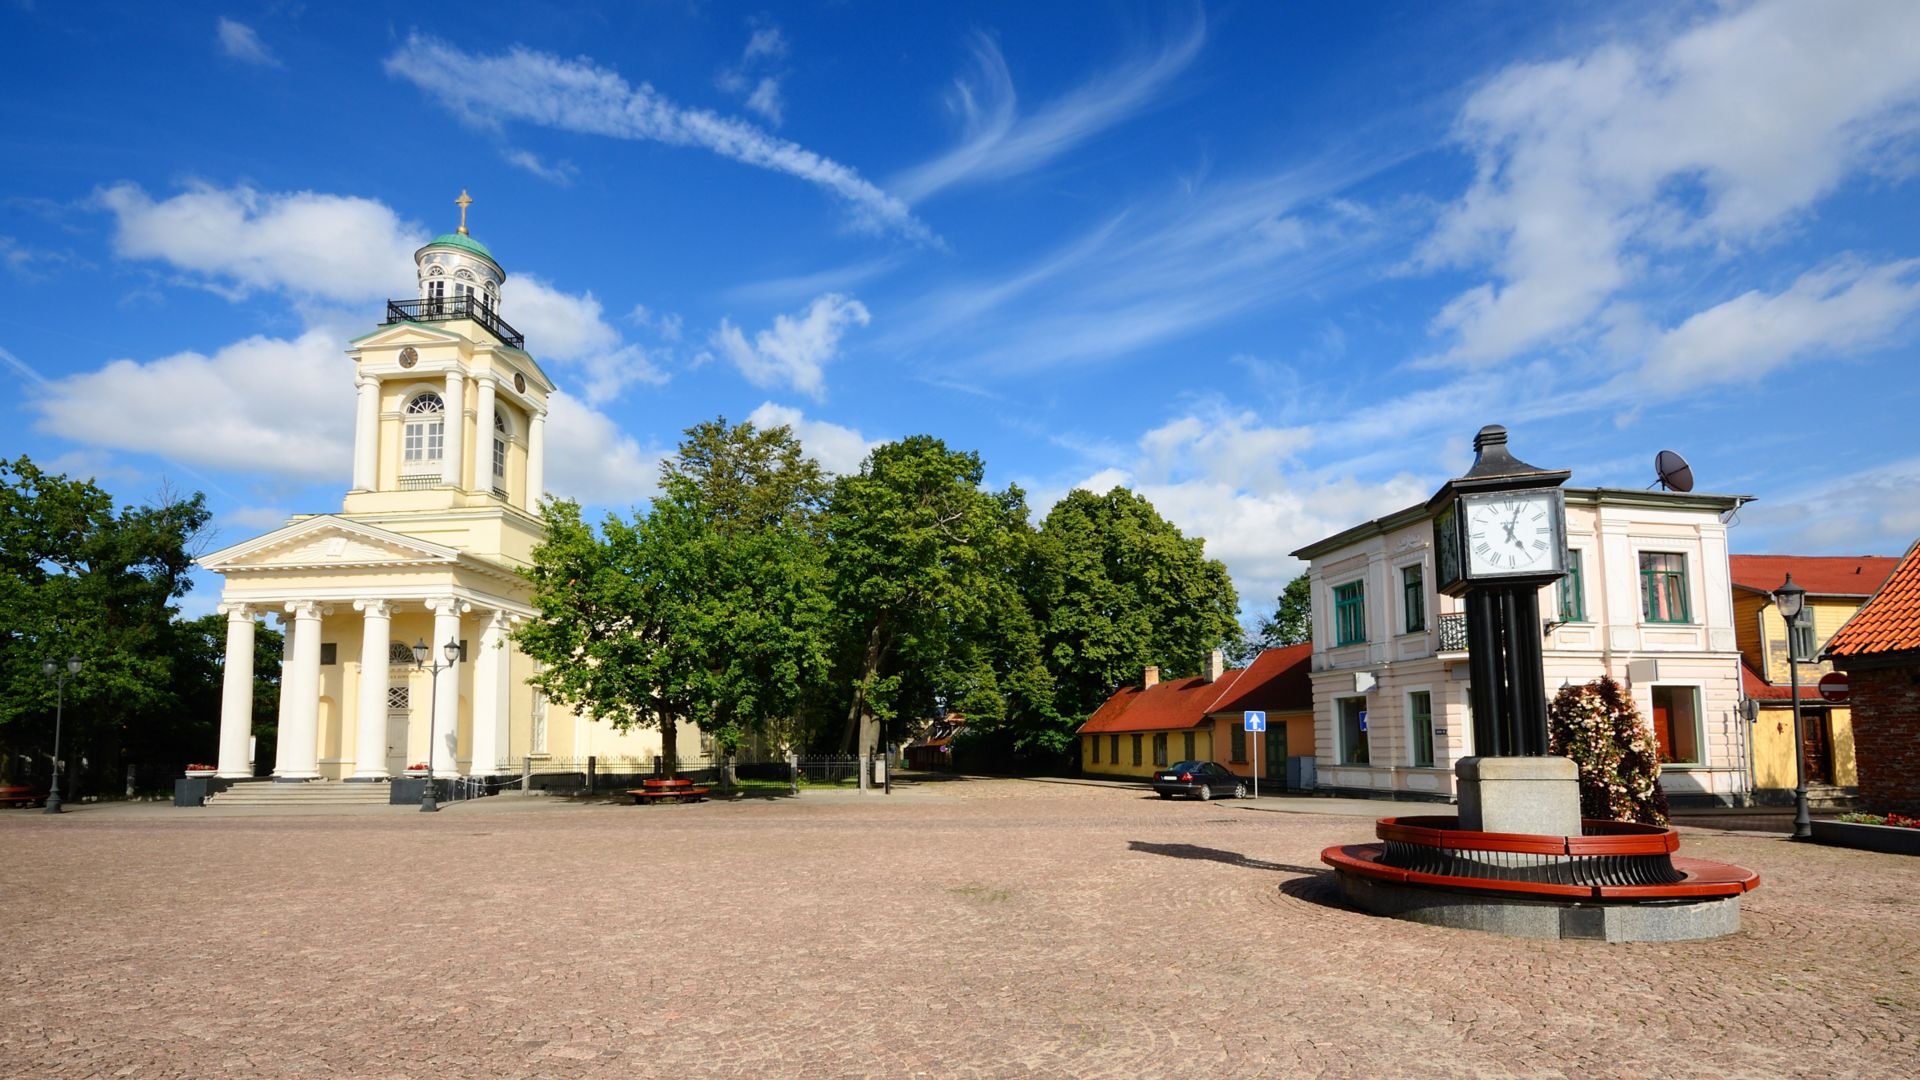 Katoliku kirik Ventspilsi vanas osas.